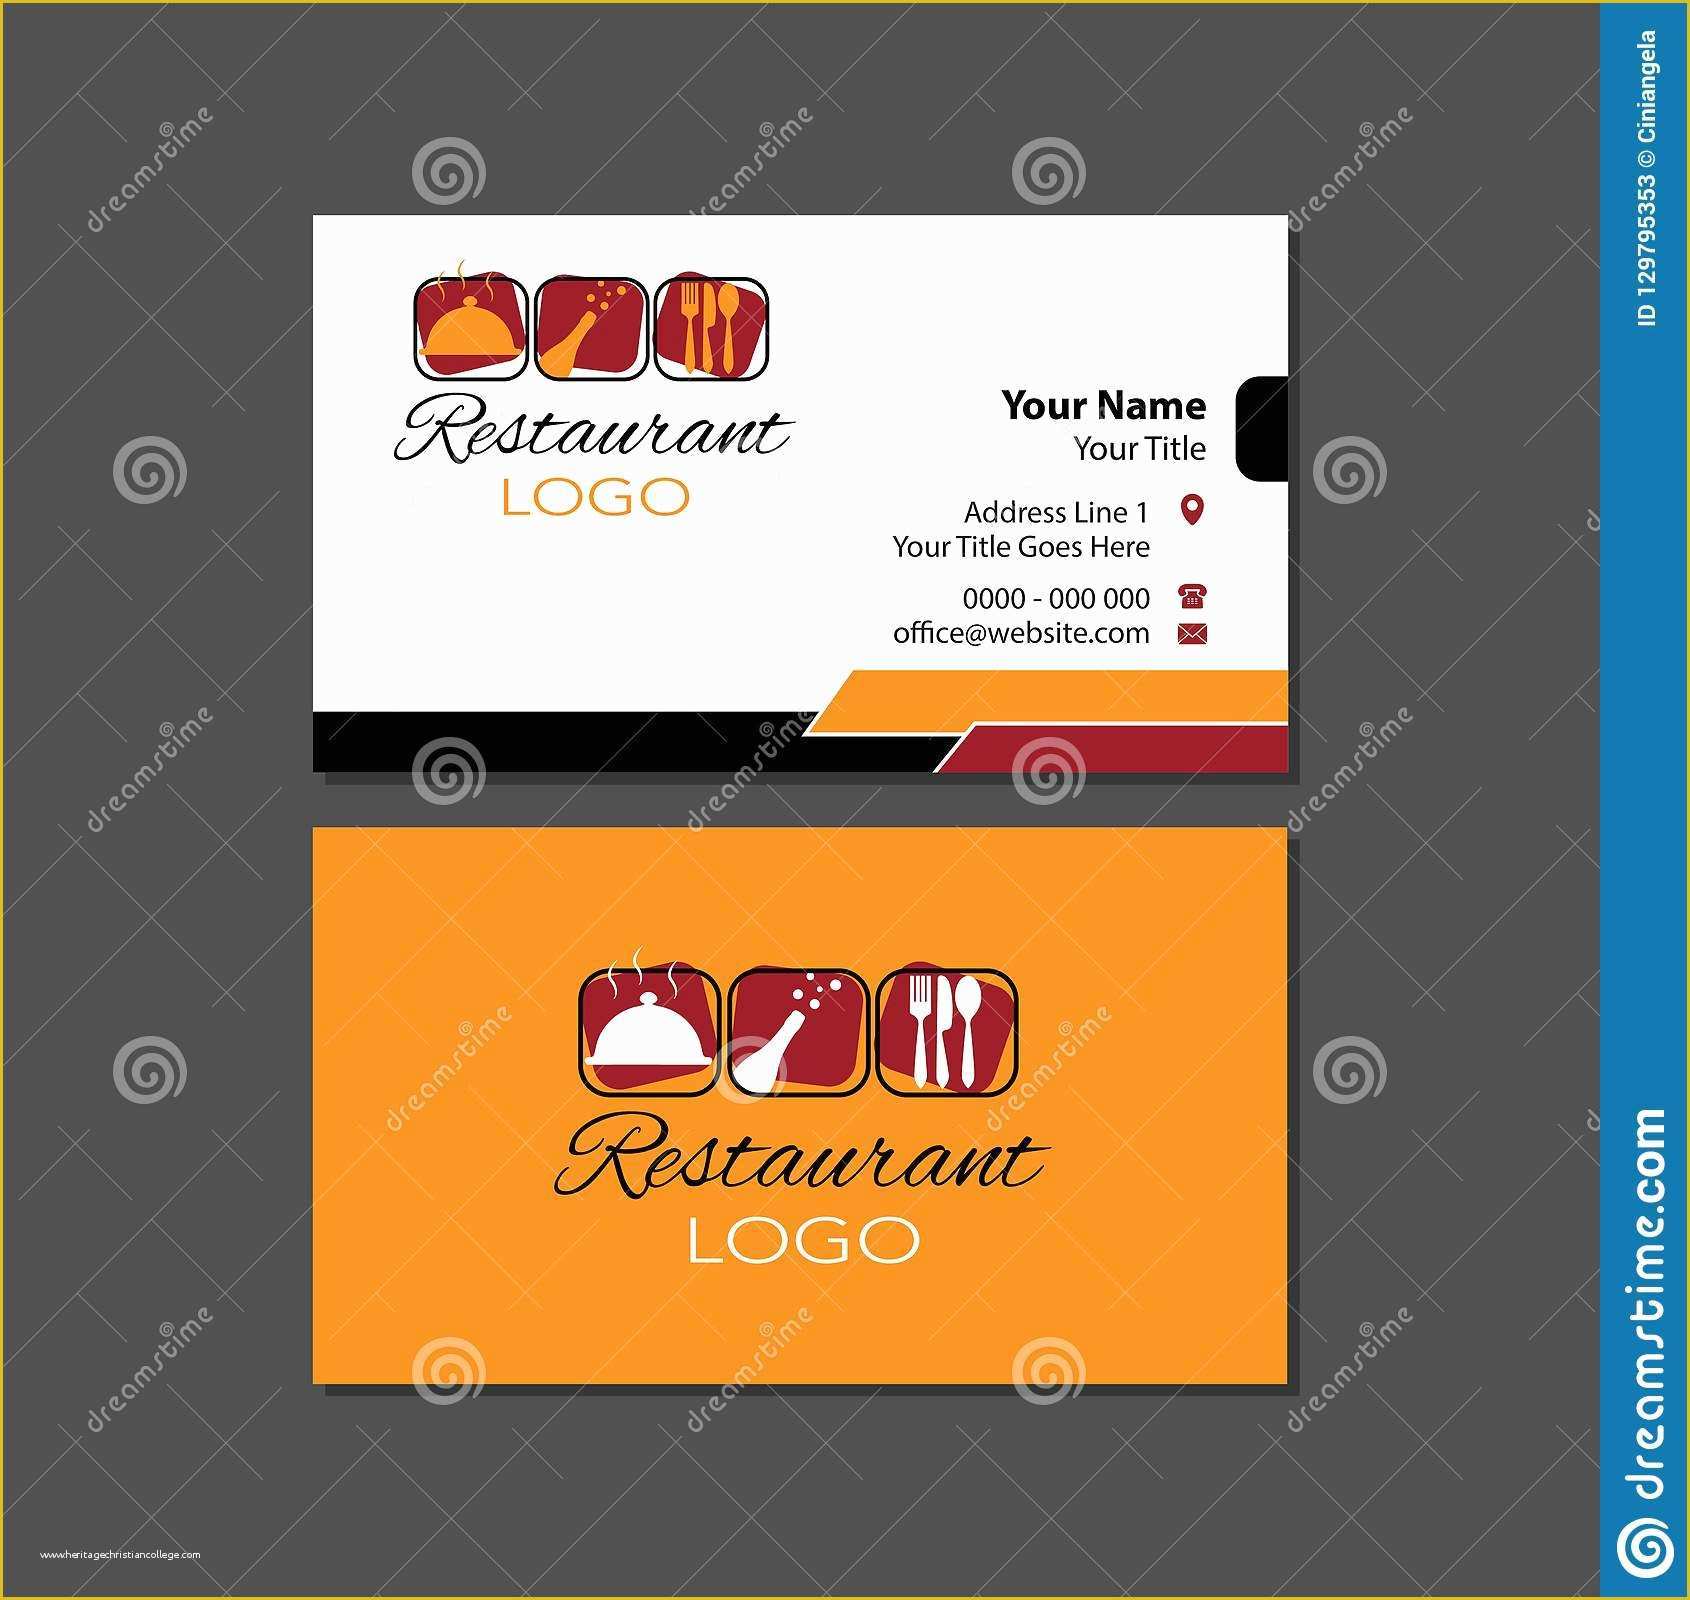 Restaurant Business Card Template Free Download Of Restaurant Business Card Template Editorial Stock